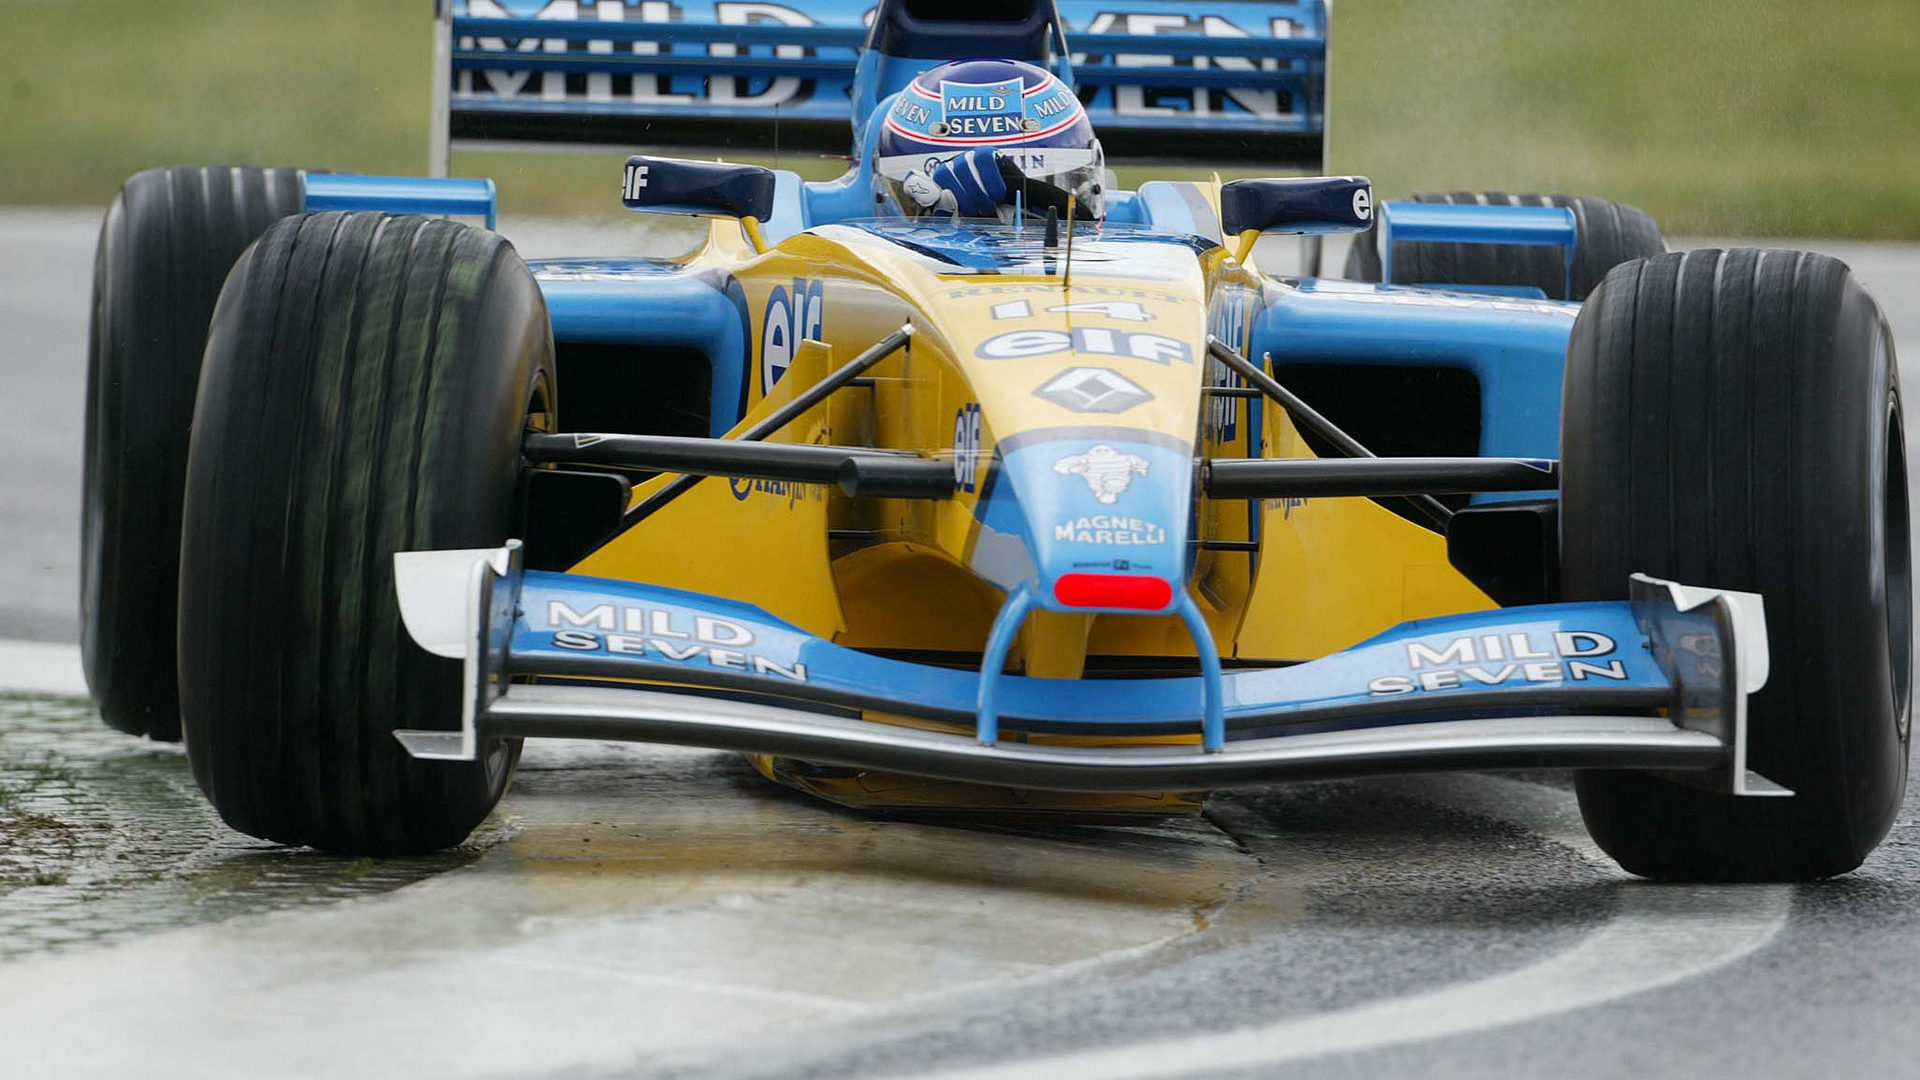 HD Wallpapers 2002 Formula 1 Grand Prix of San Marino | F1 Fansite